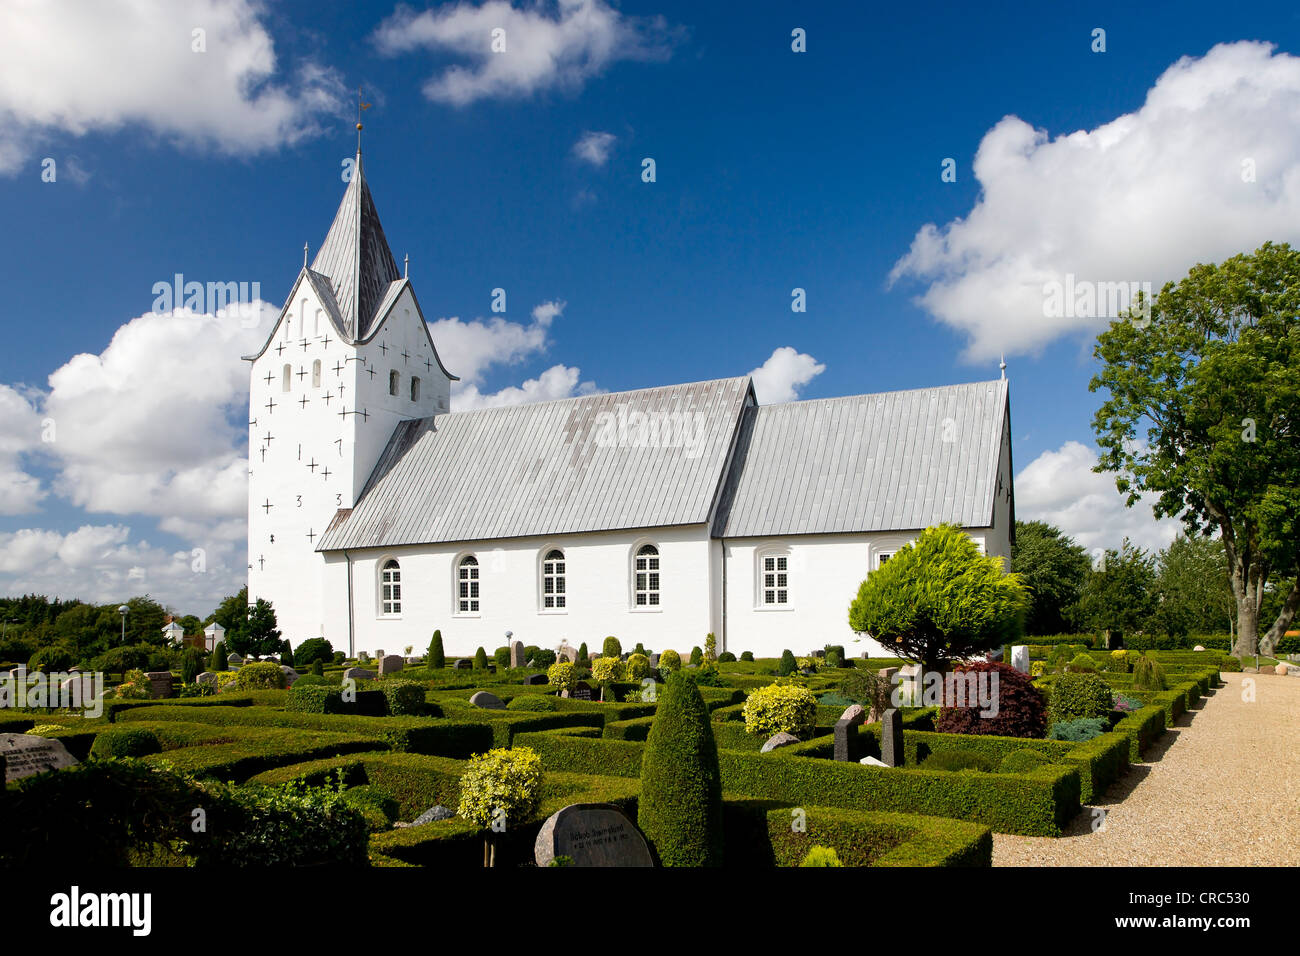 Typical Danish west coast church with lead roof, Jutland, Denmark, Europe Stock Photo